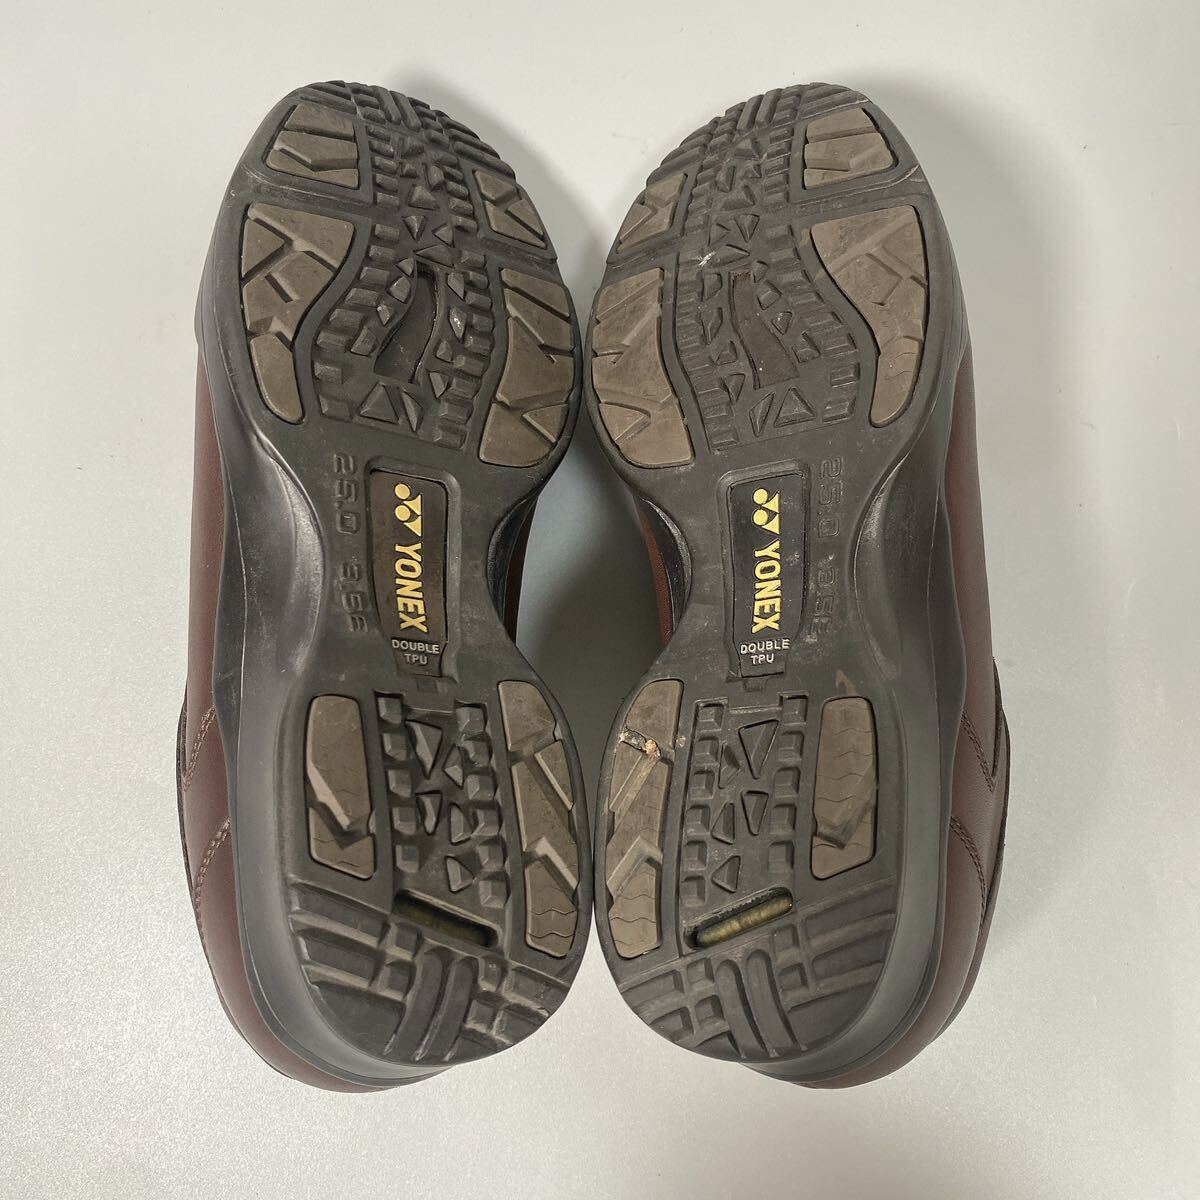 YONEX Yonex natural leather walking shoes leather sneakers 25cm MT07 men's B32431-100